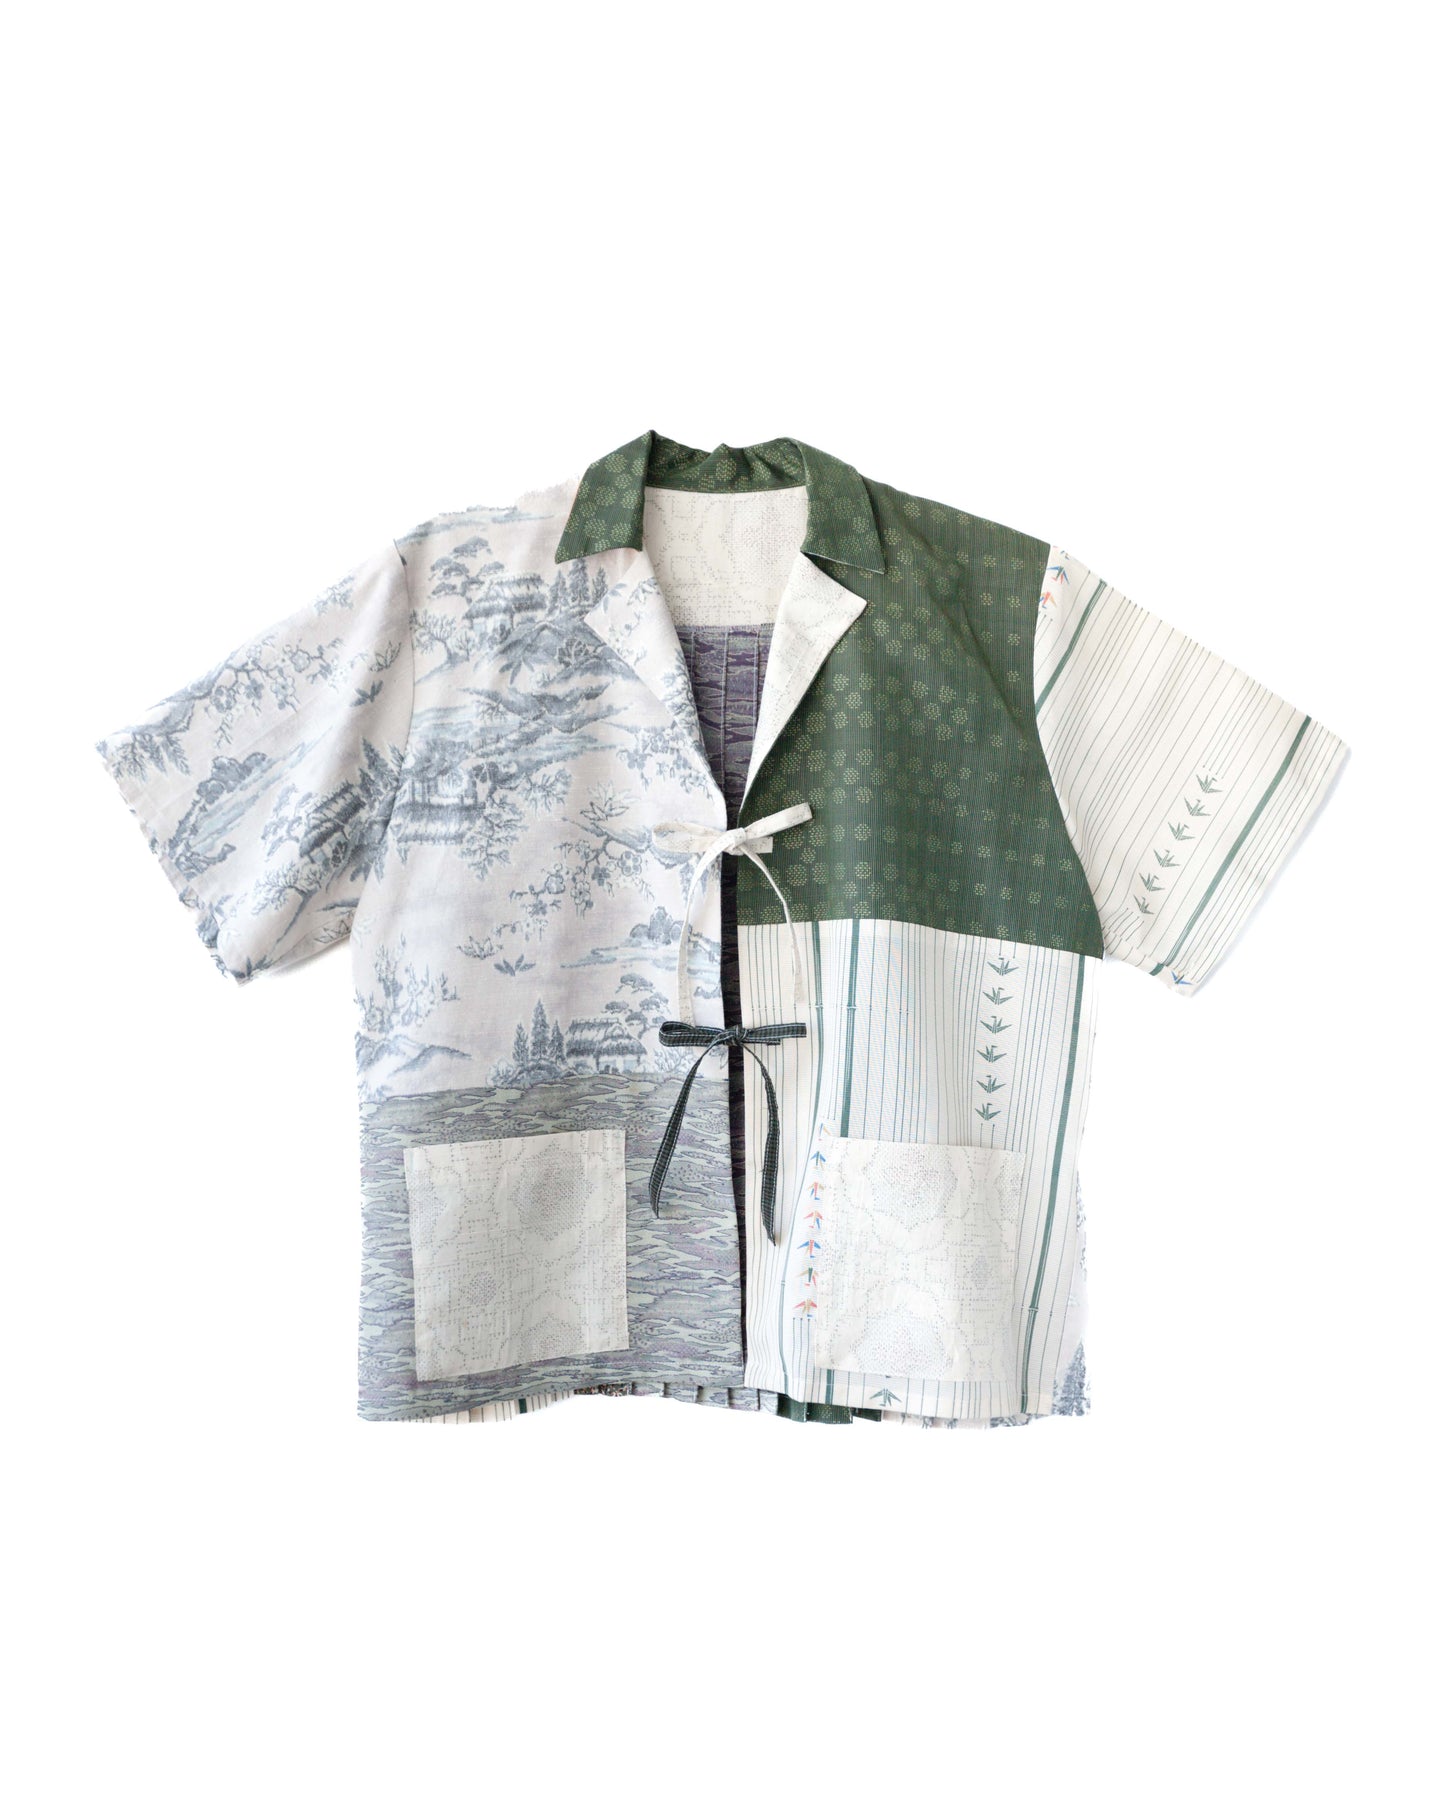 Kimono Working Pleats Shirt- Green 01 M